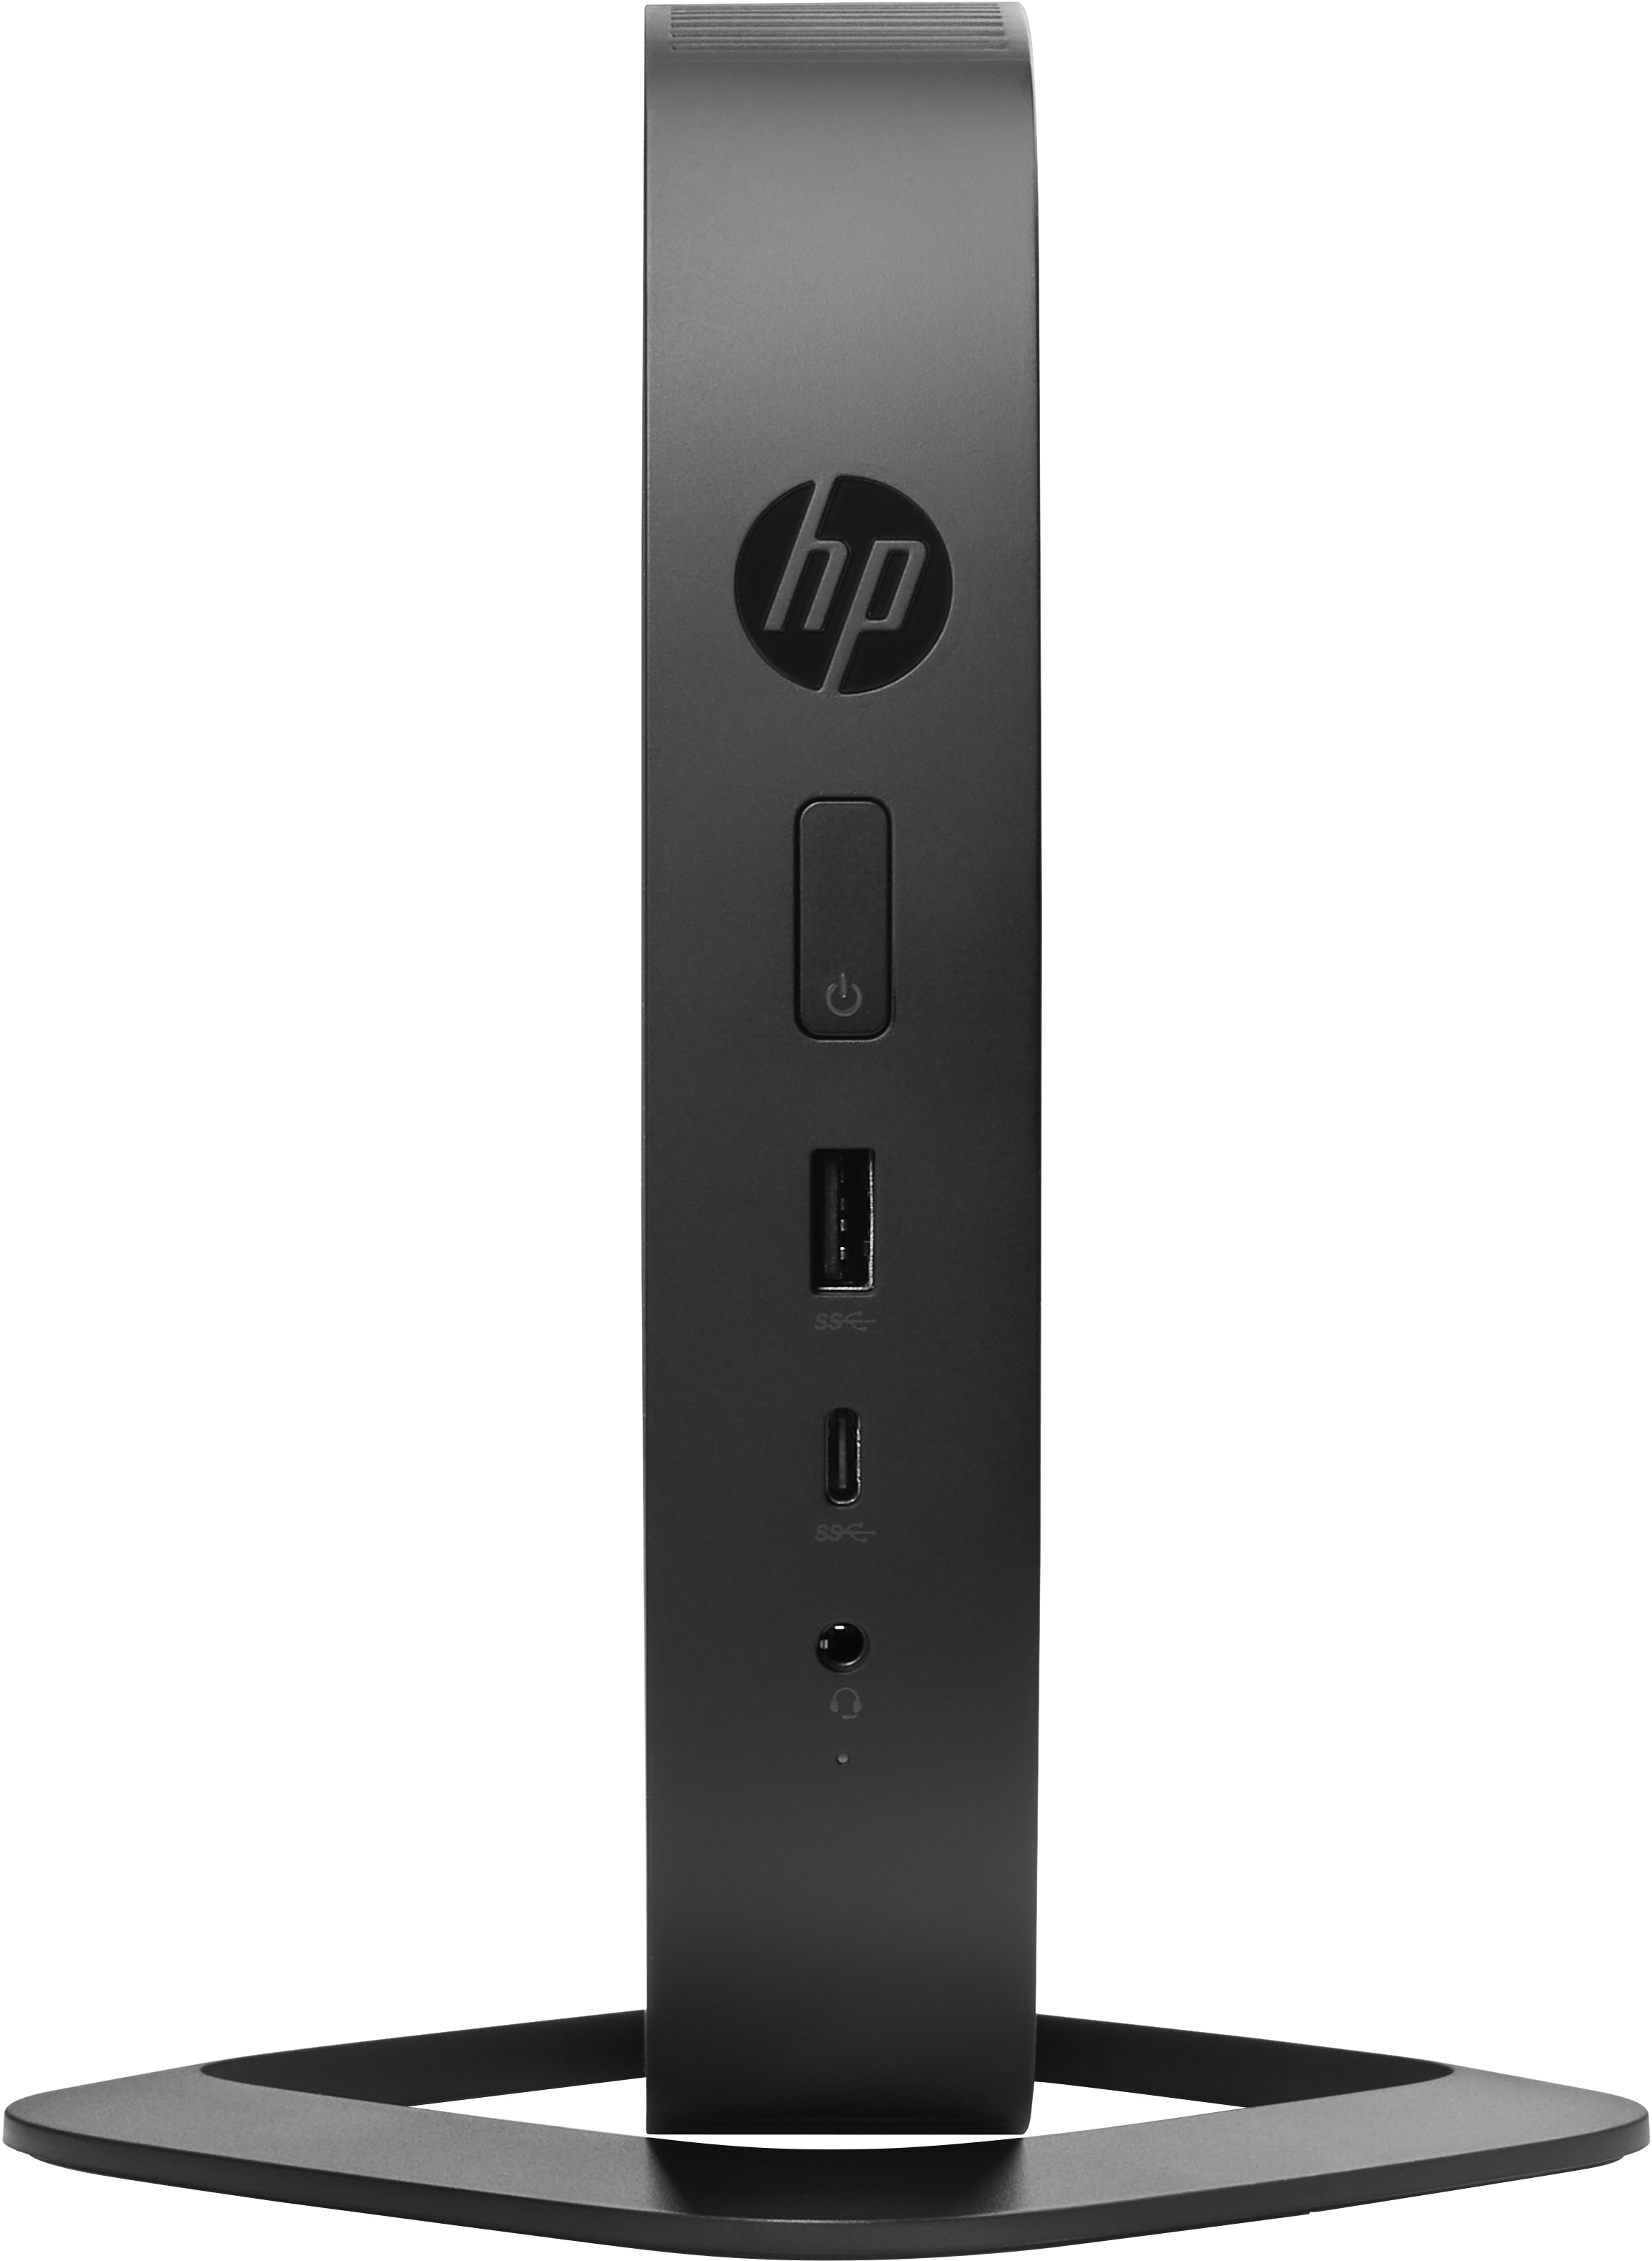 HP t530 - Thin client - tower - 1 x GX-215JJ 1.5 GHz - RAM 4 GB - flash 8 GB - MLC - Radeon R2E - GigE - HP ThinPro - monitor: none - keyboard: US